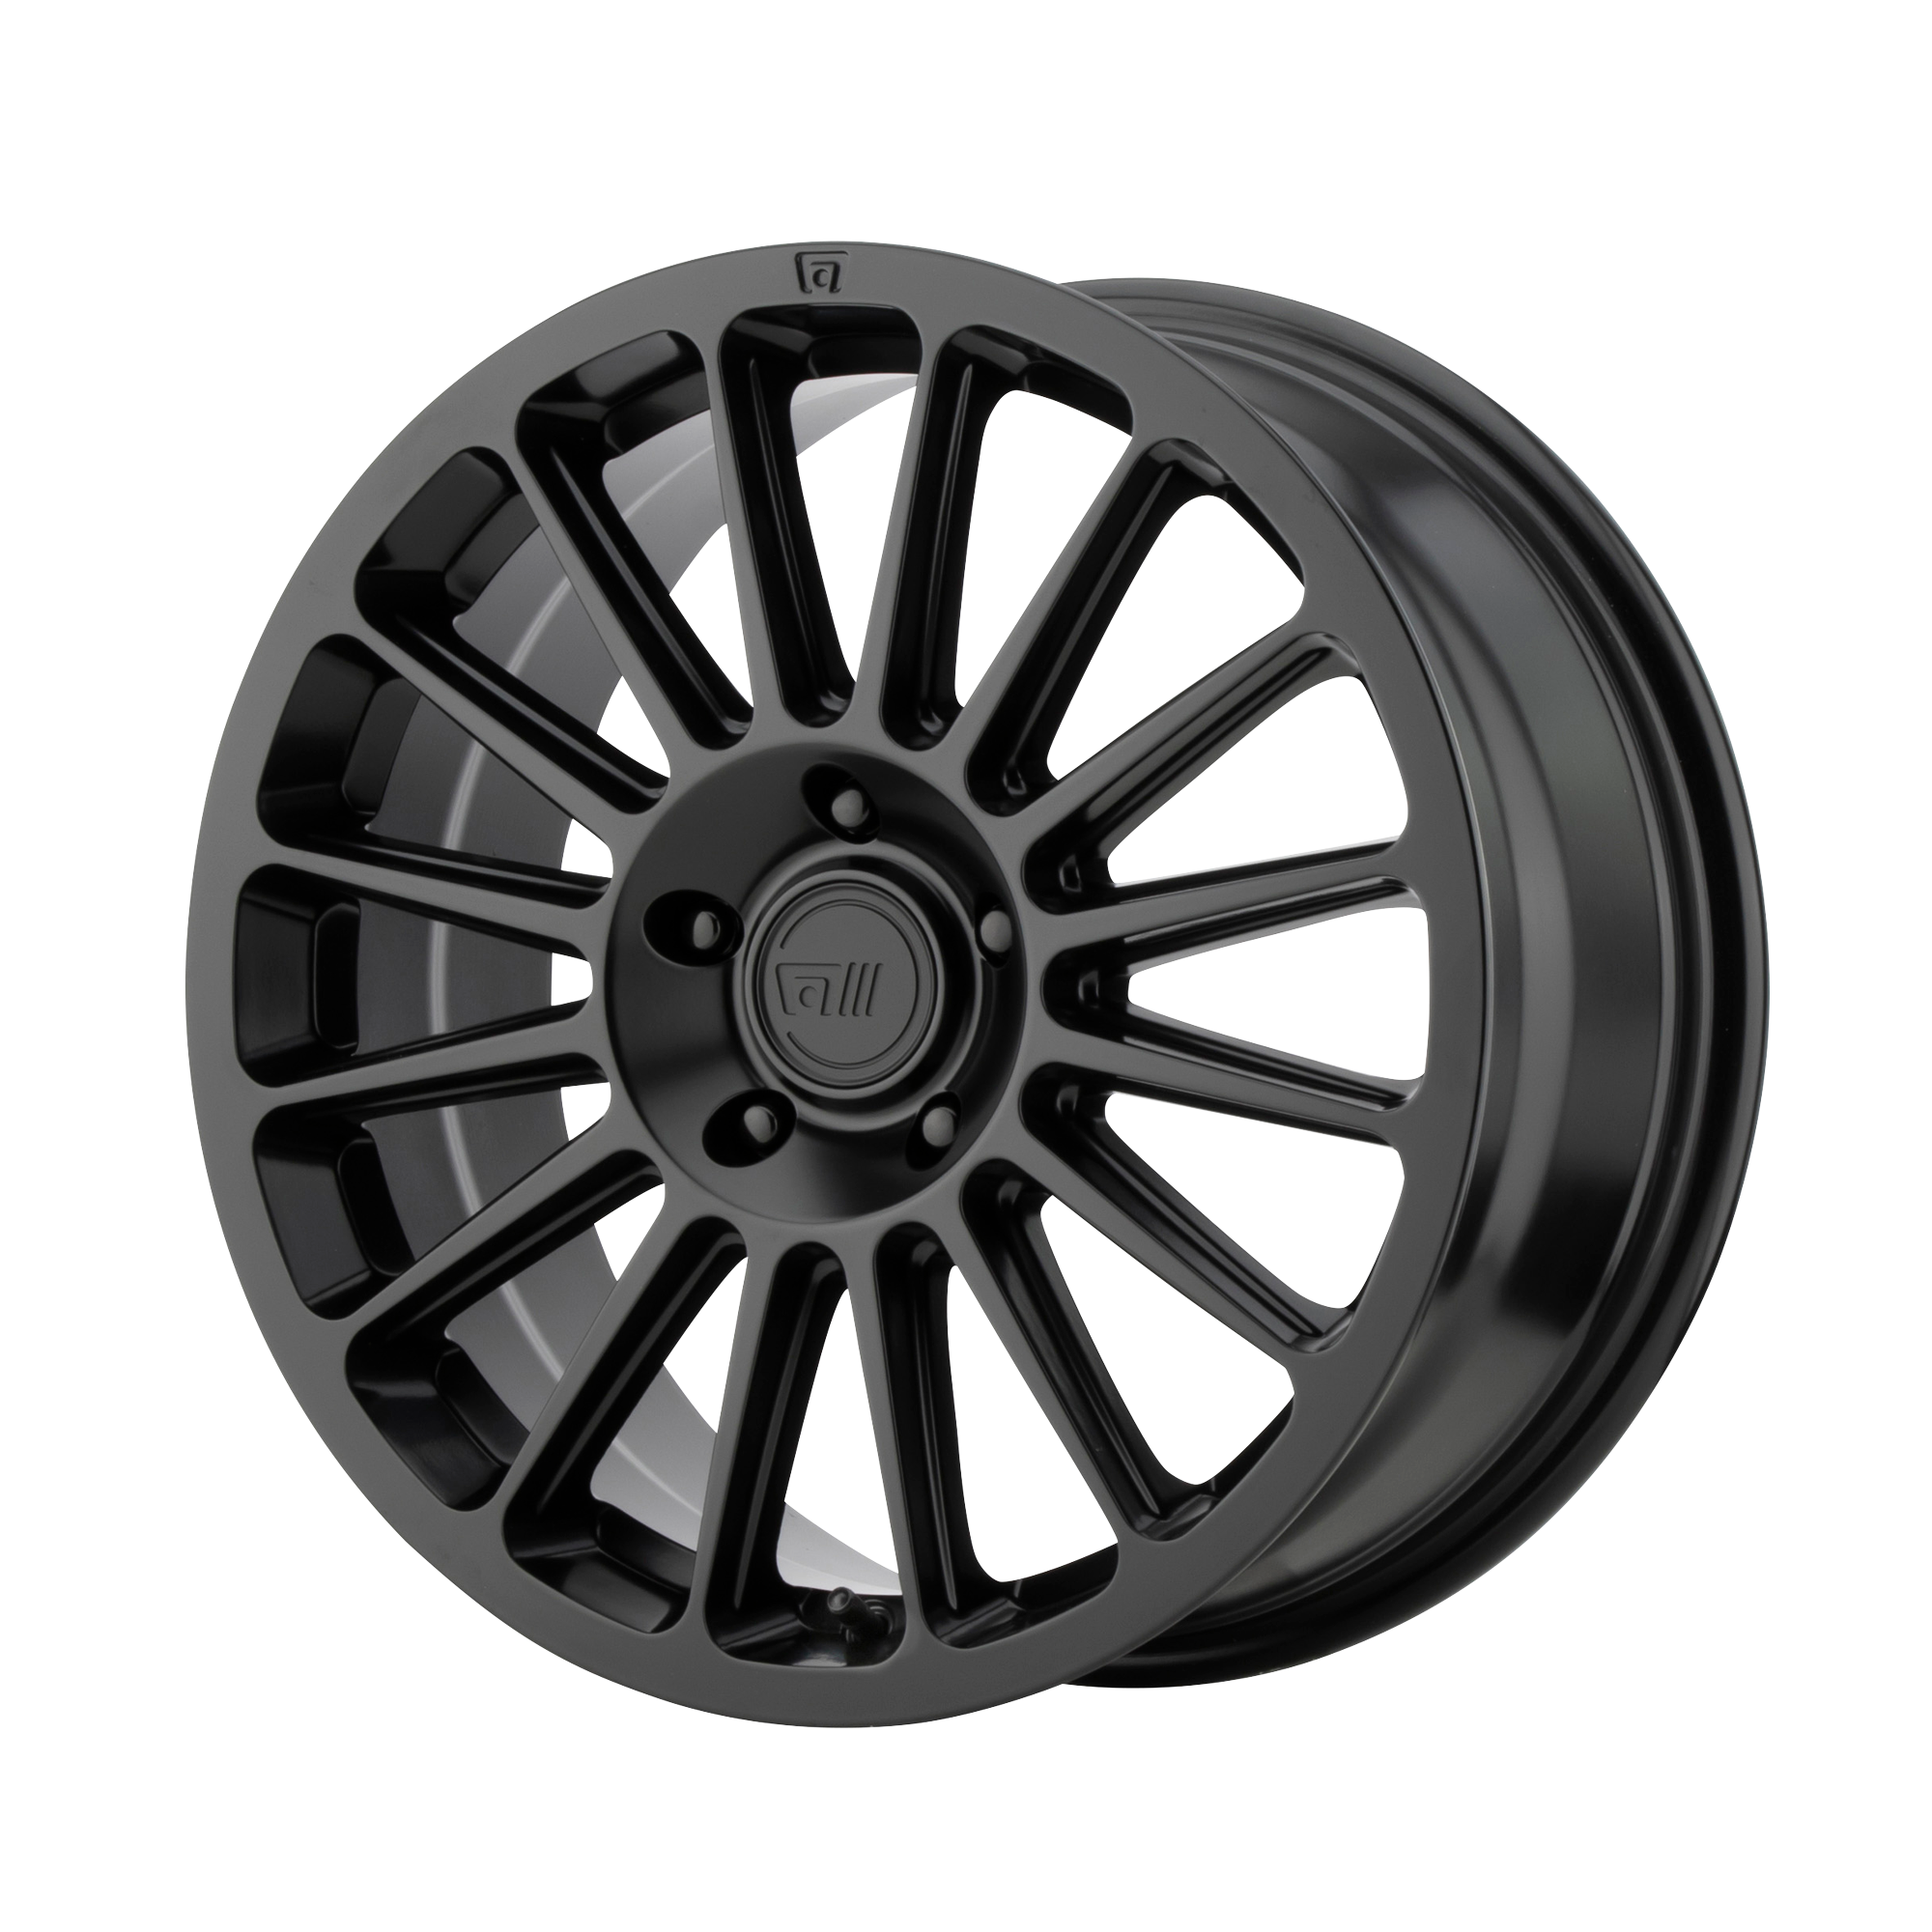 MR141 16x7.5 5x112.00 SATIN BLACK (40 mm) - Tires and Engine Performance